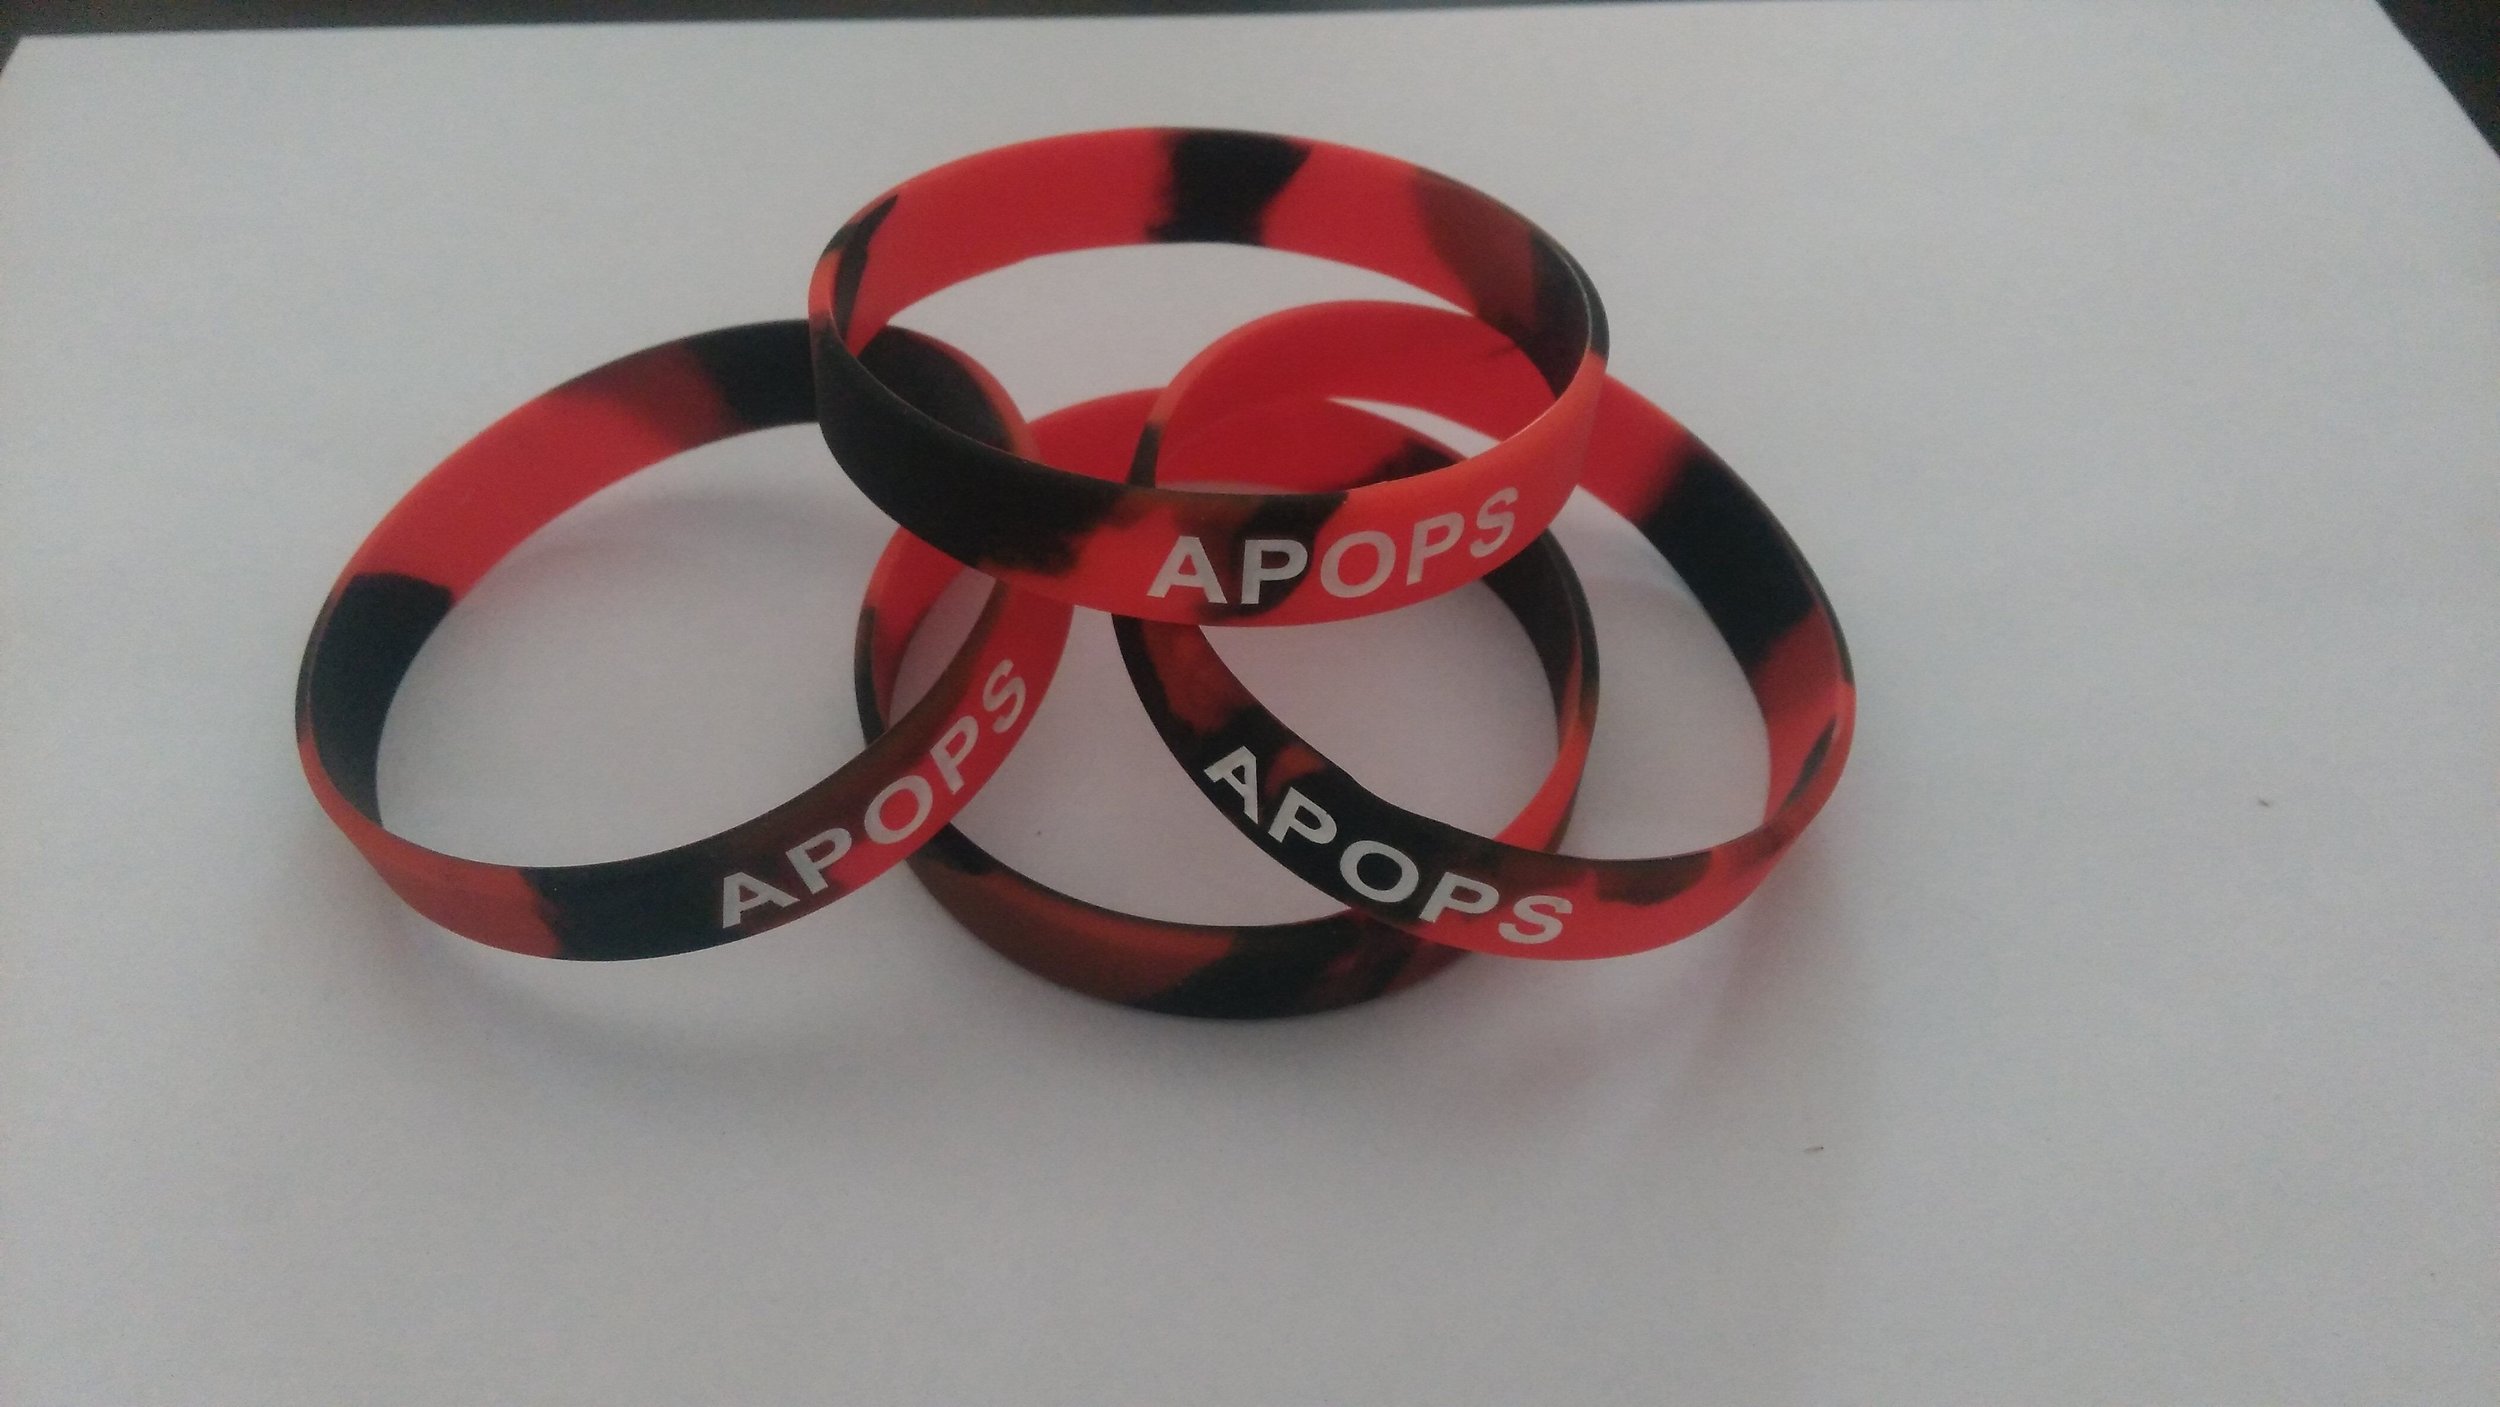 APOPS  wristband.jpg